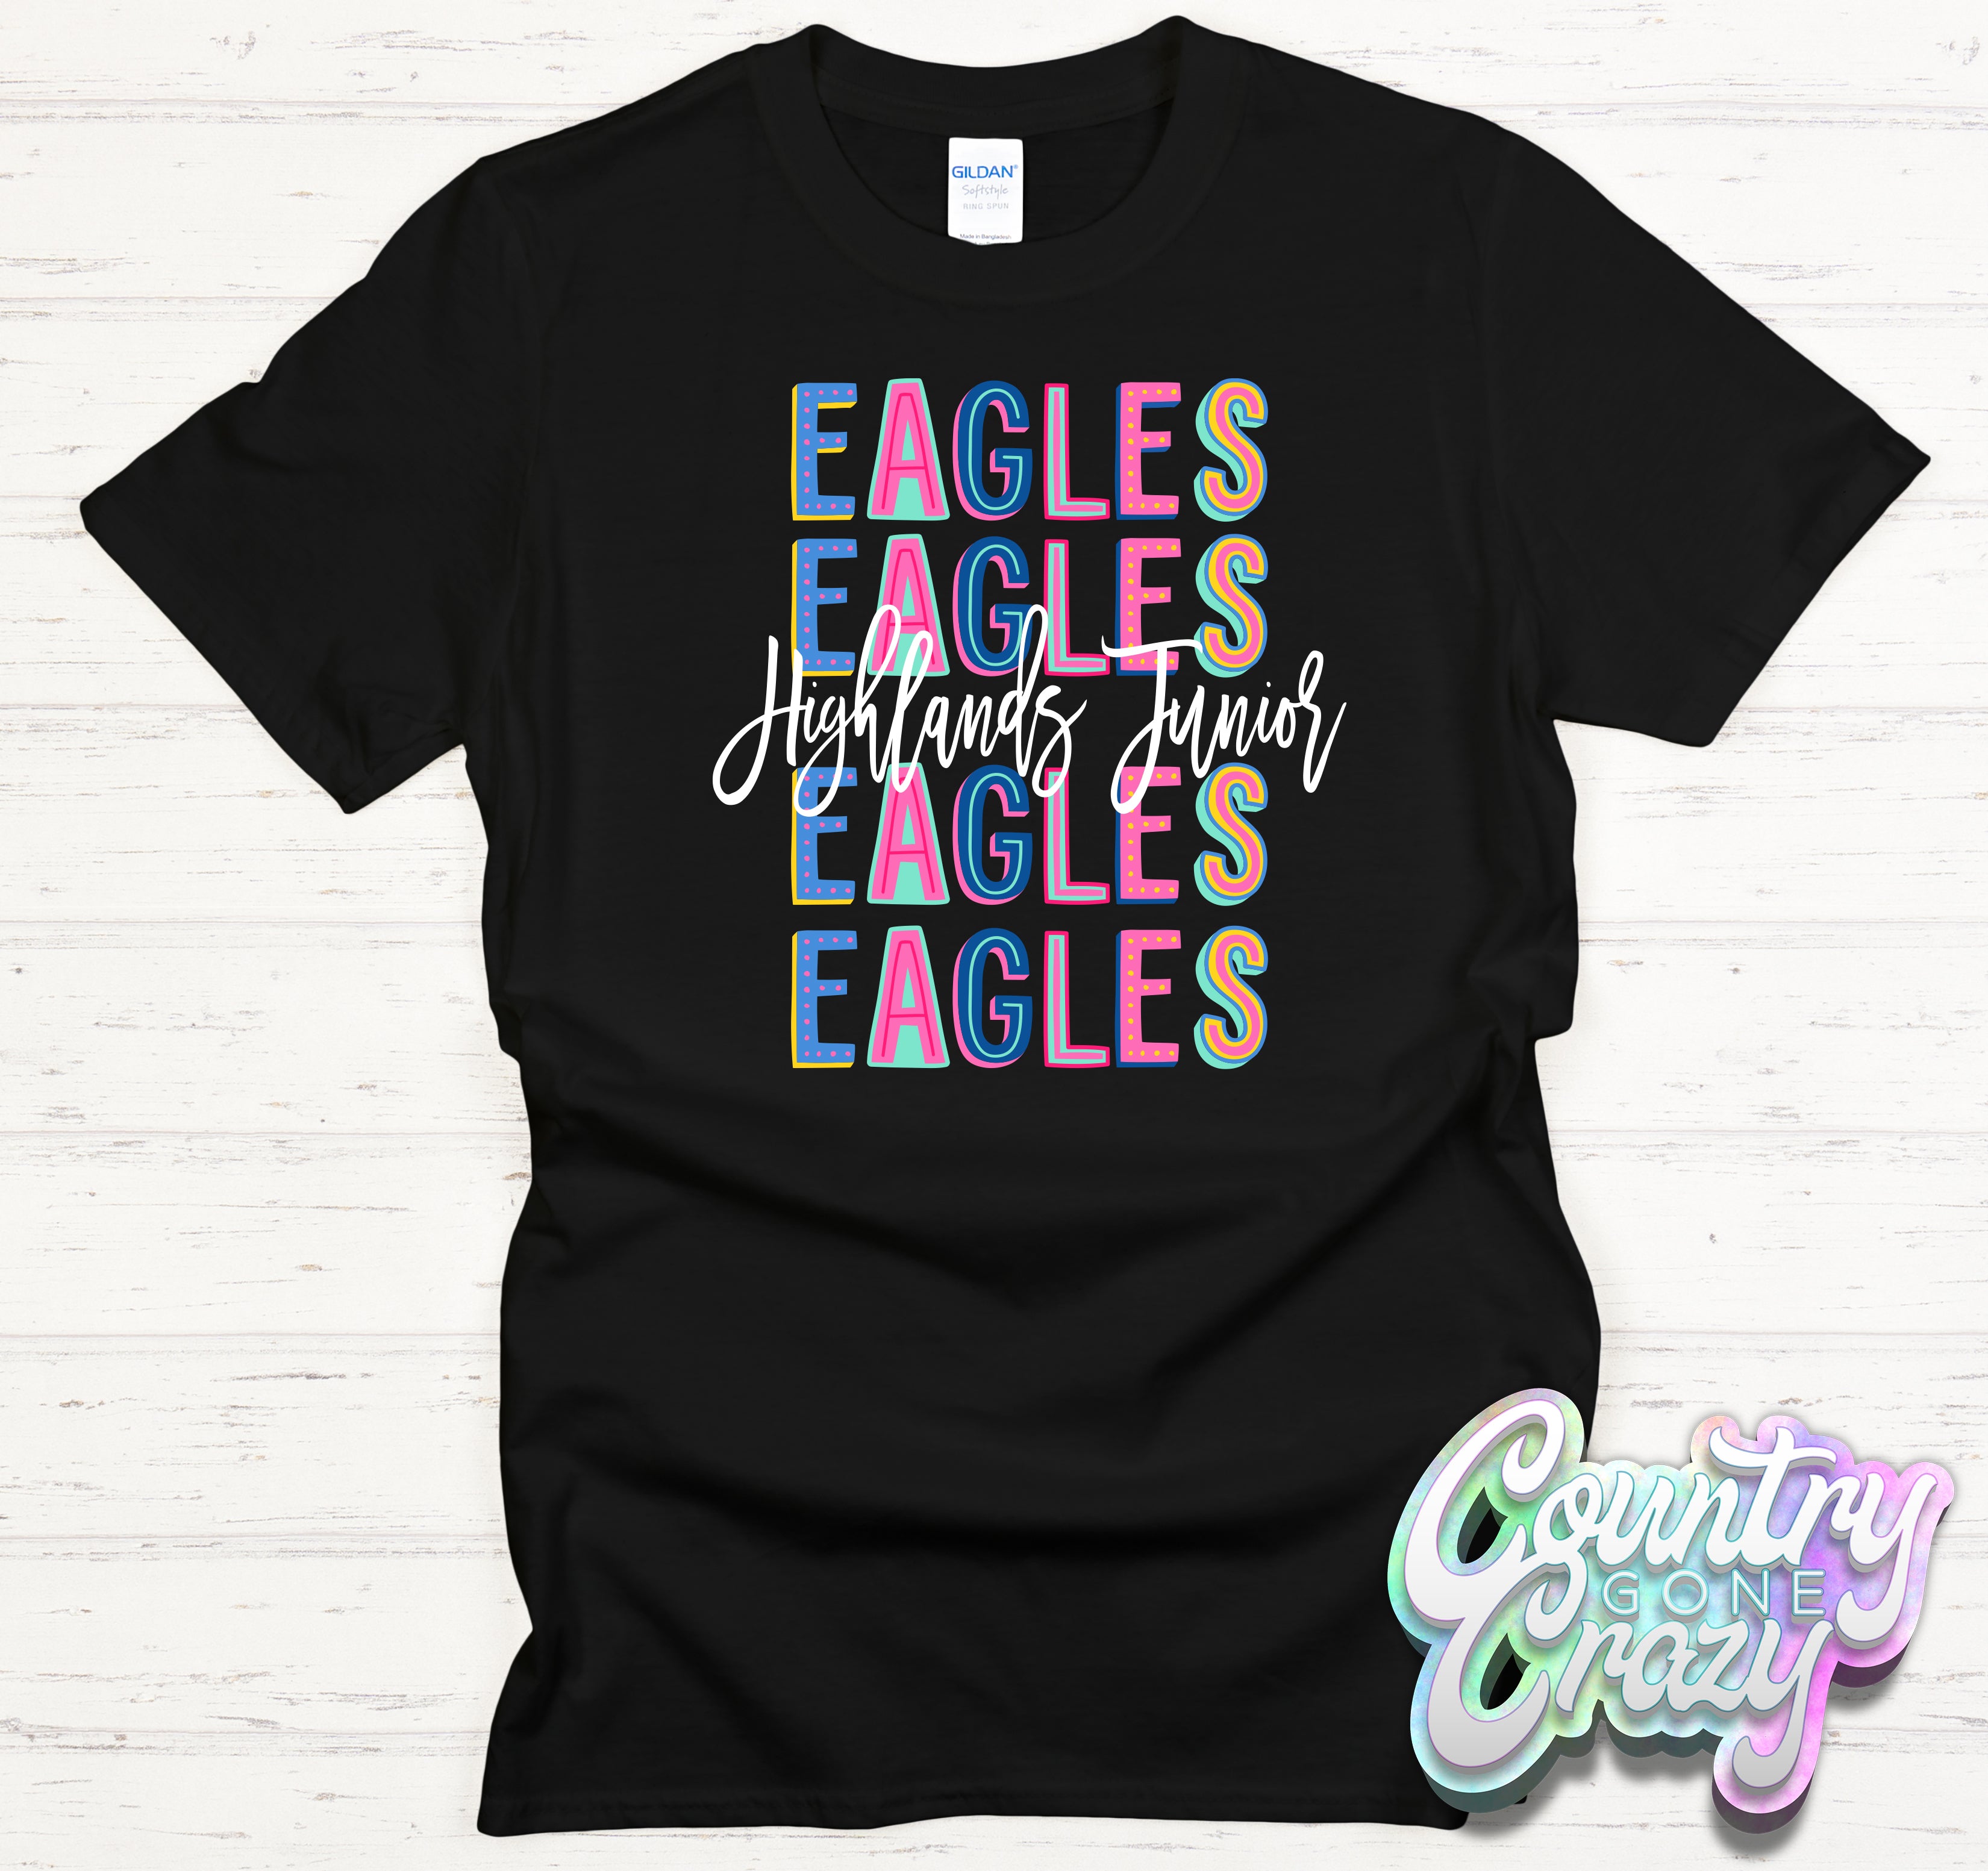 Eagles on Tour Skull T-Shirt - Small